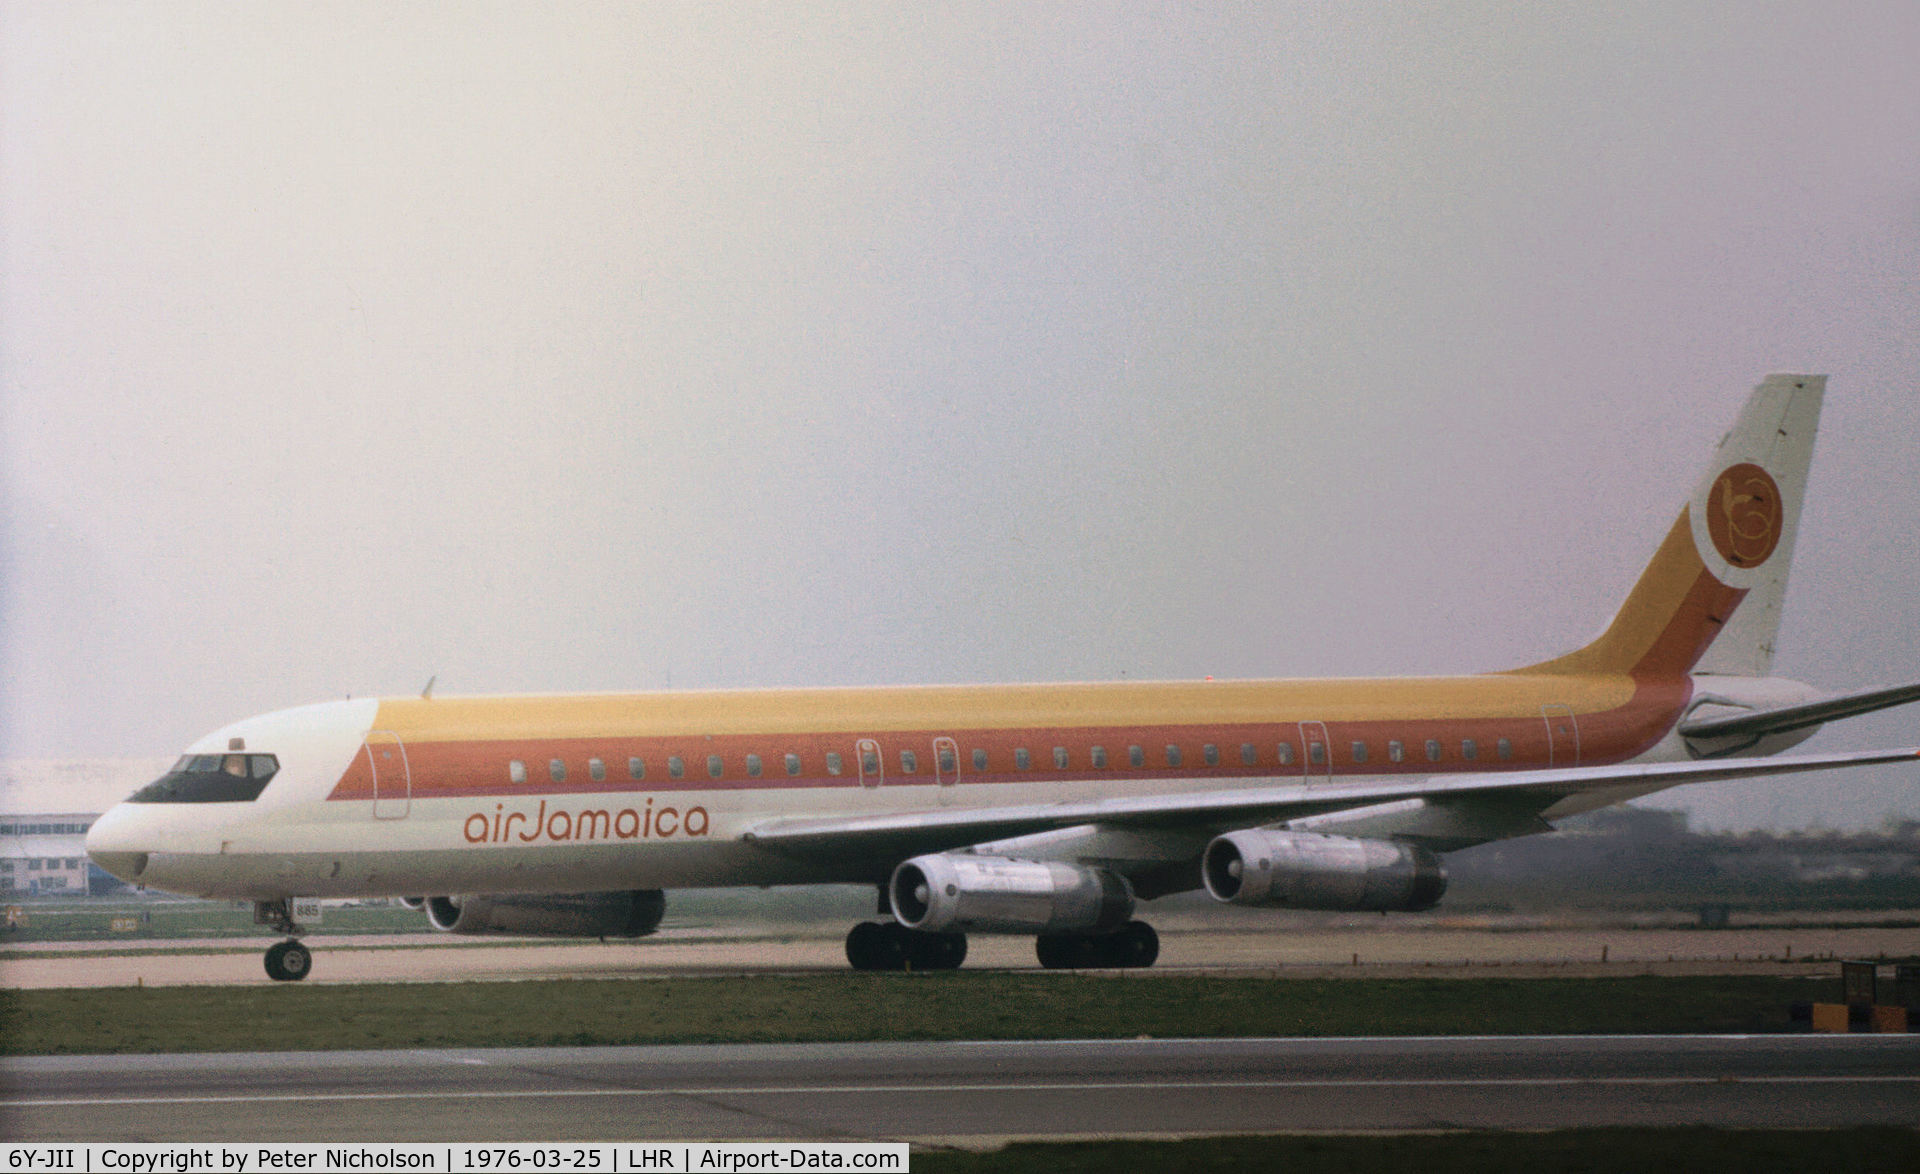 6Y-JII, 1969 Douglas DC-8-62 C/N 46084, DC-8-62 of Air Jamaica seen at Heathrow in March 1976.